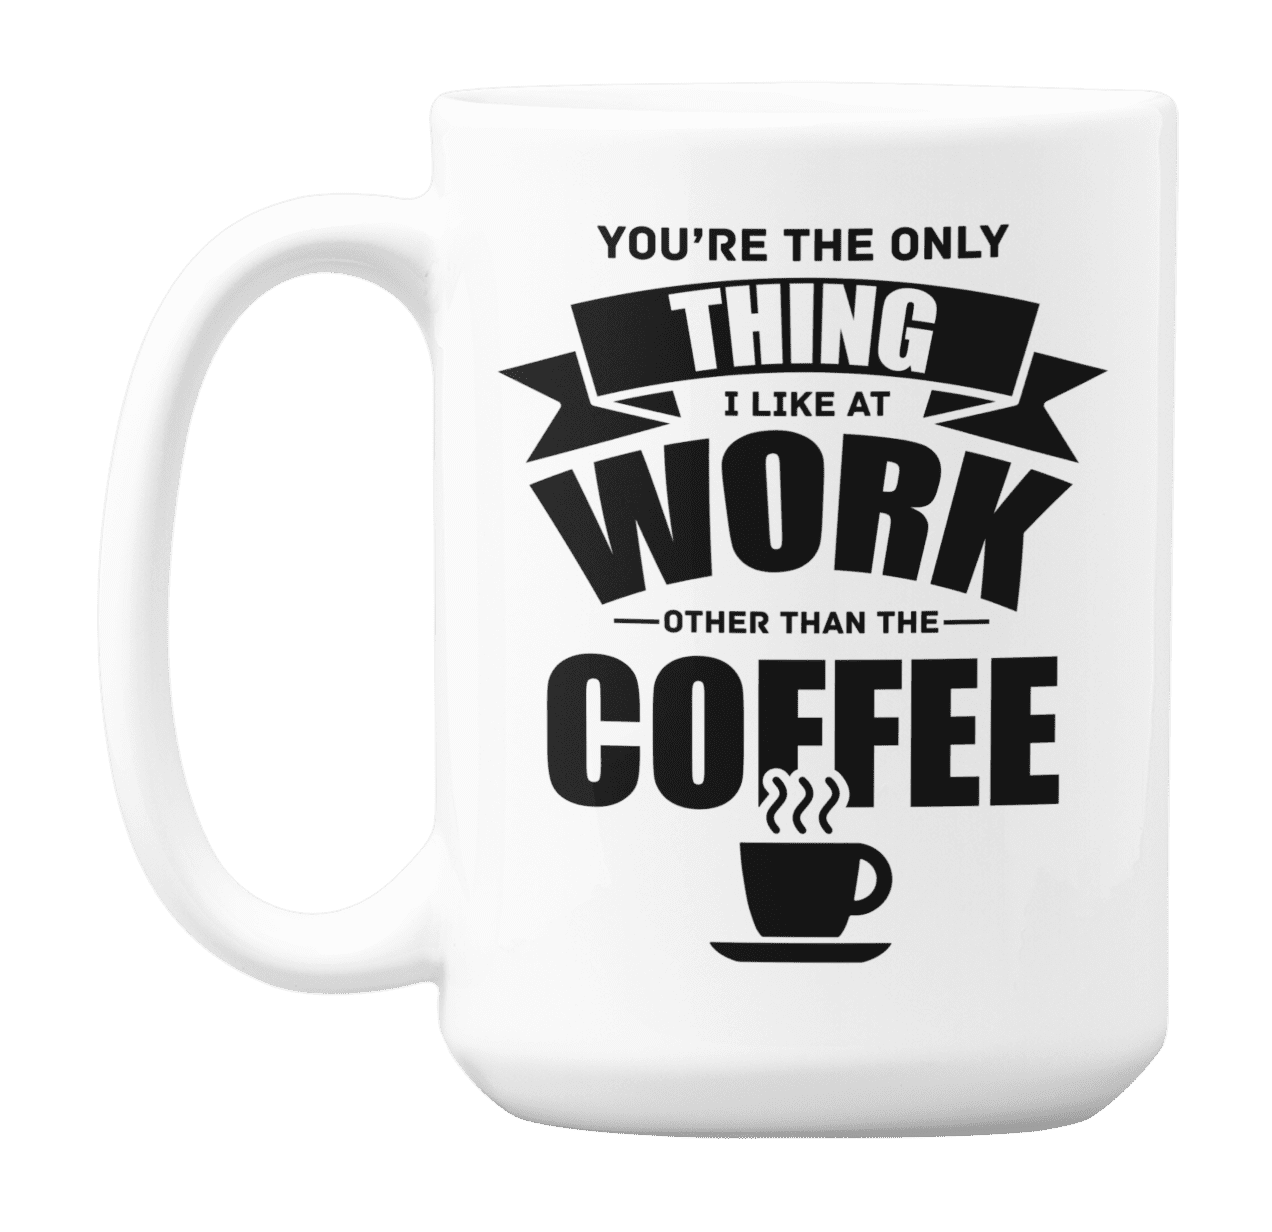 Dear Mom Funny Coffee Mug Tea Cup Mother's Day Gift Idea - RANSALEX